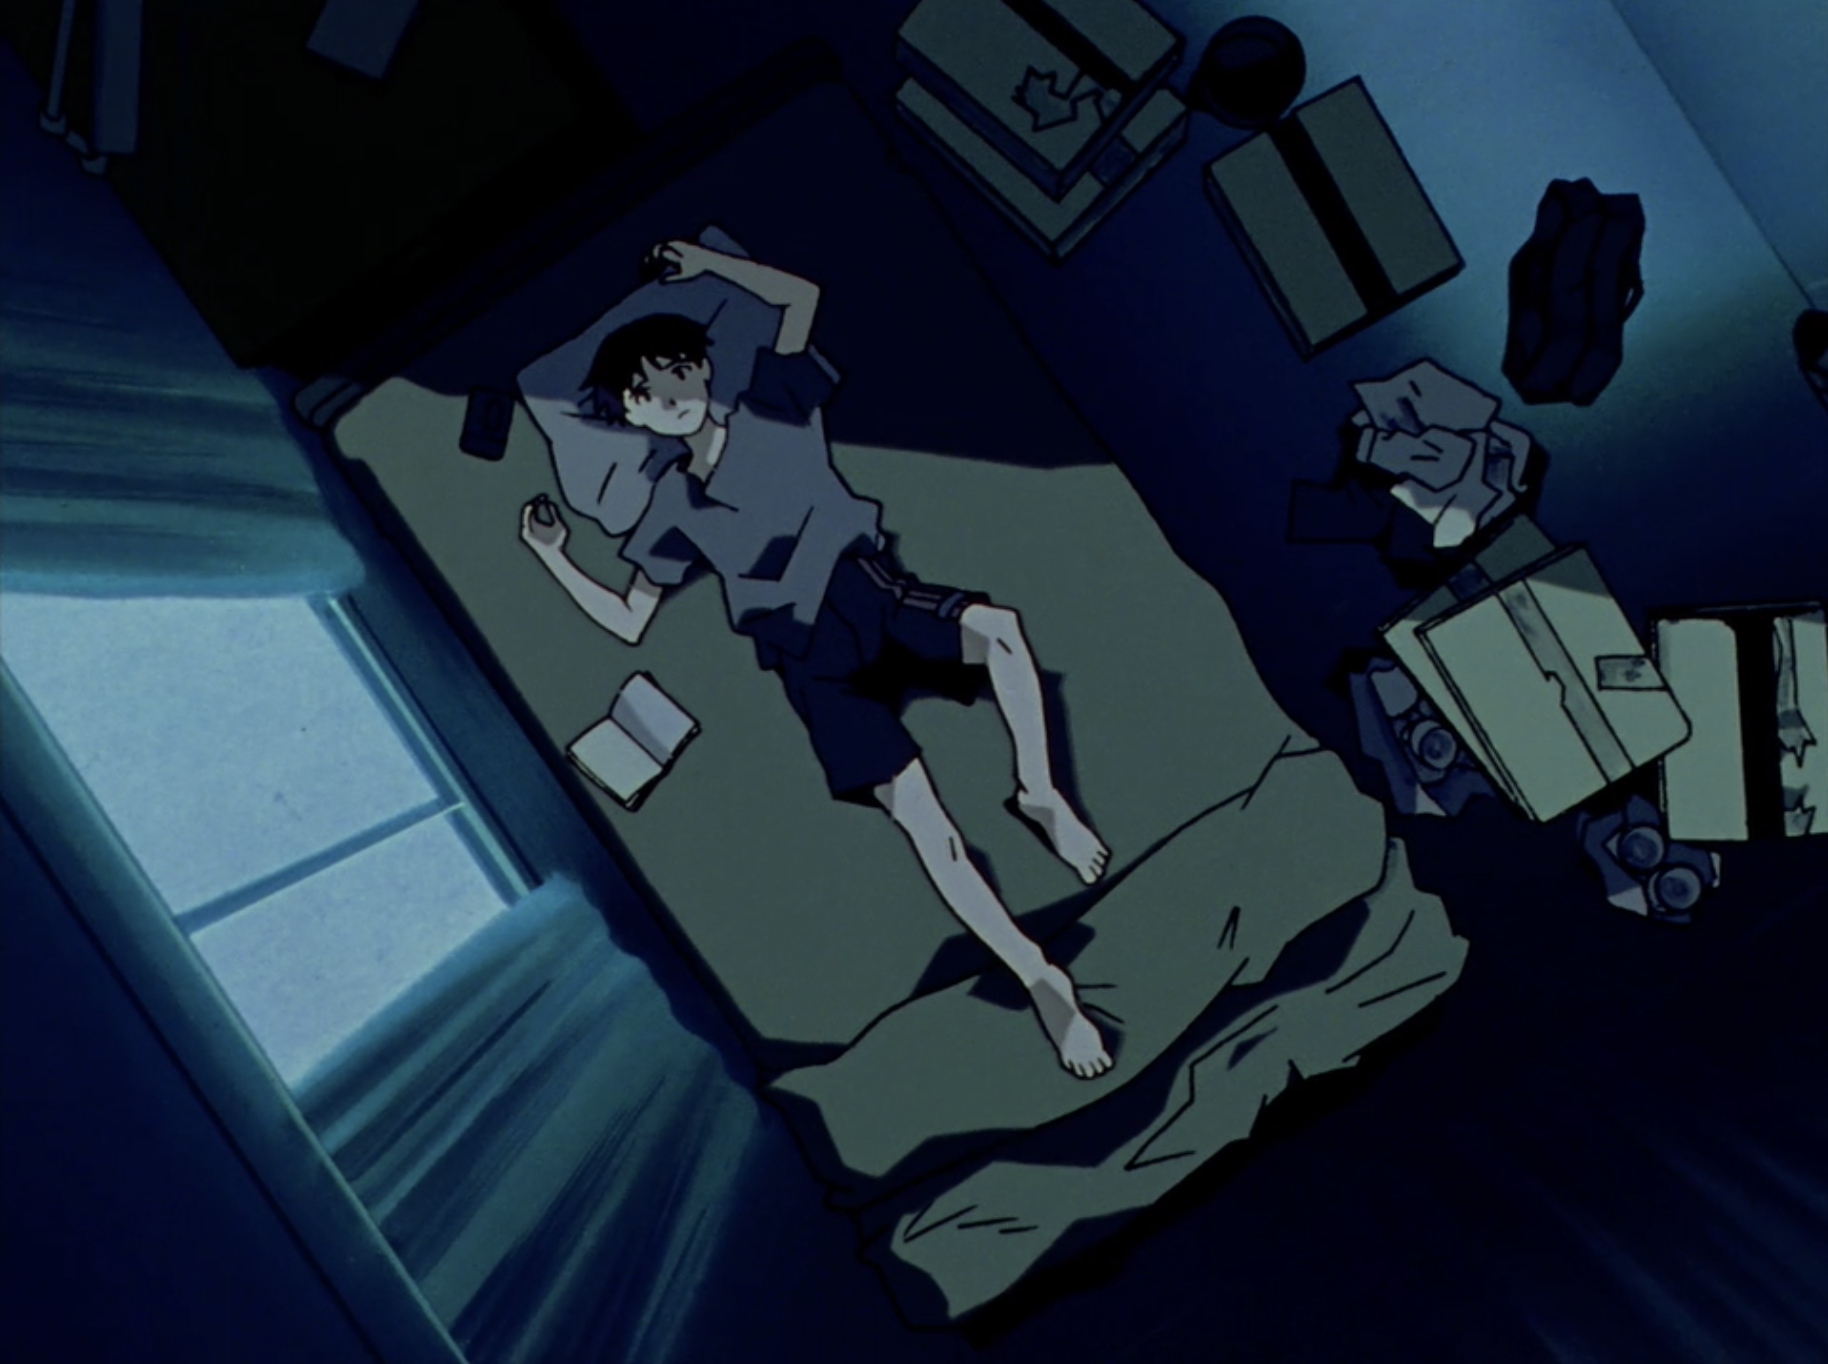 Shinji in bed